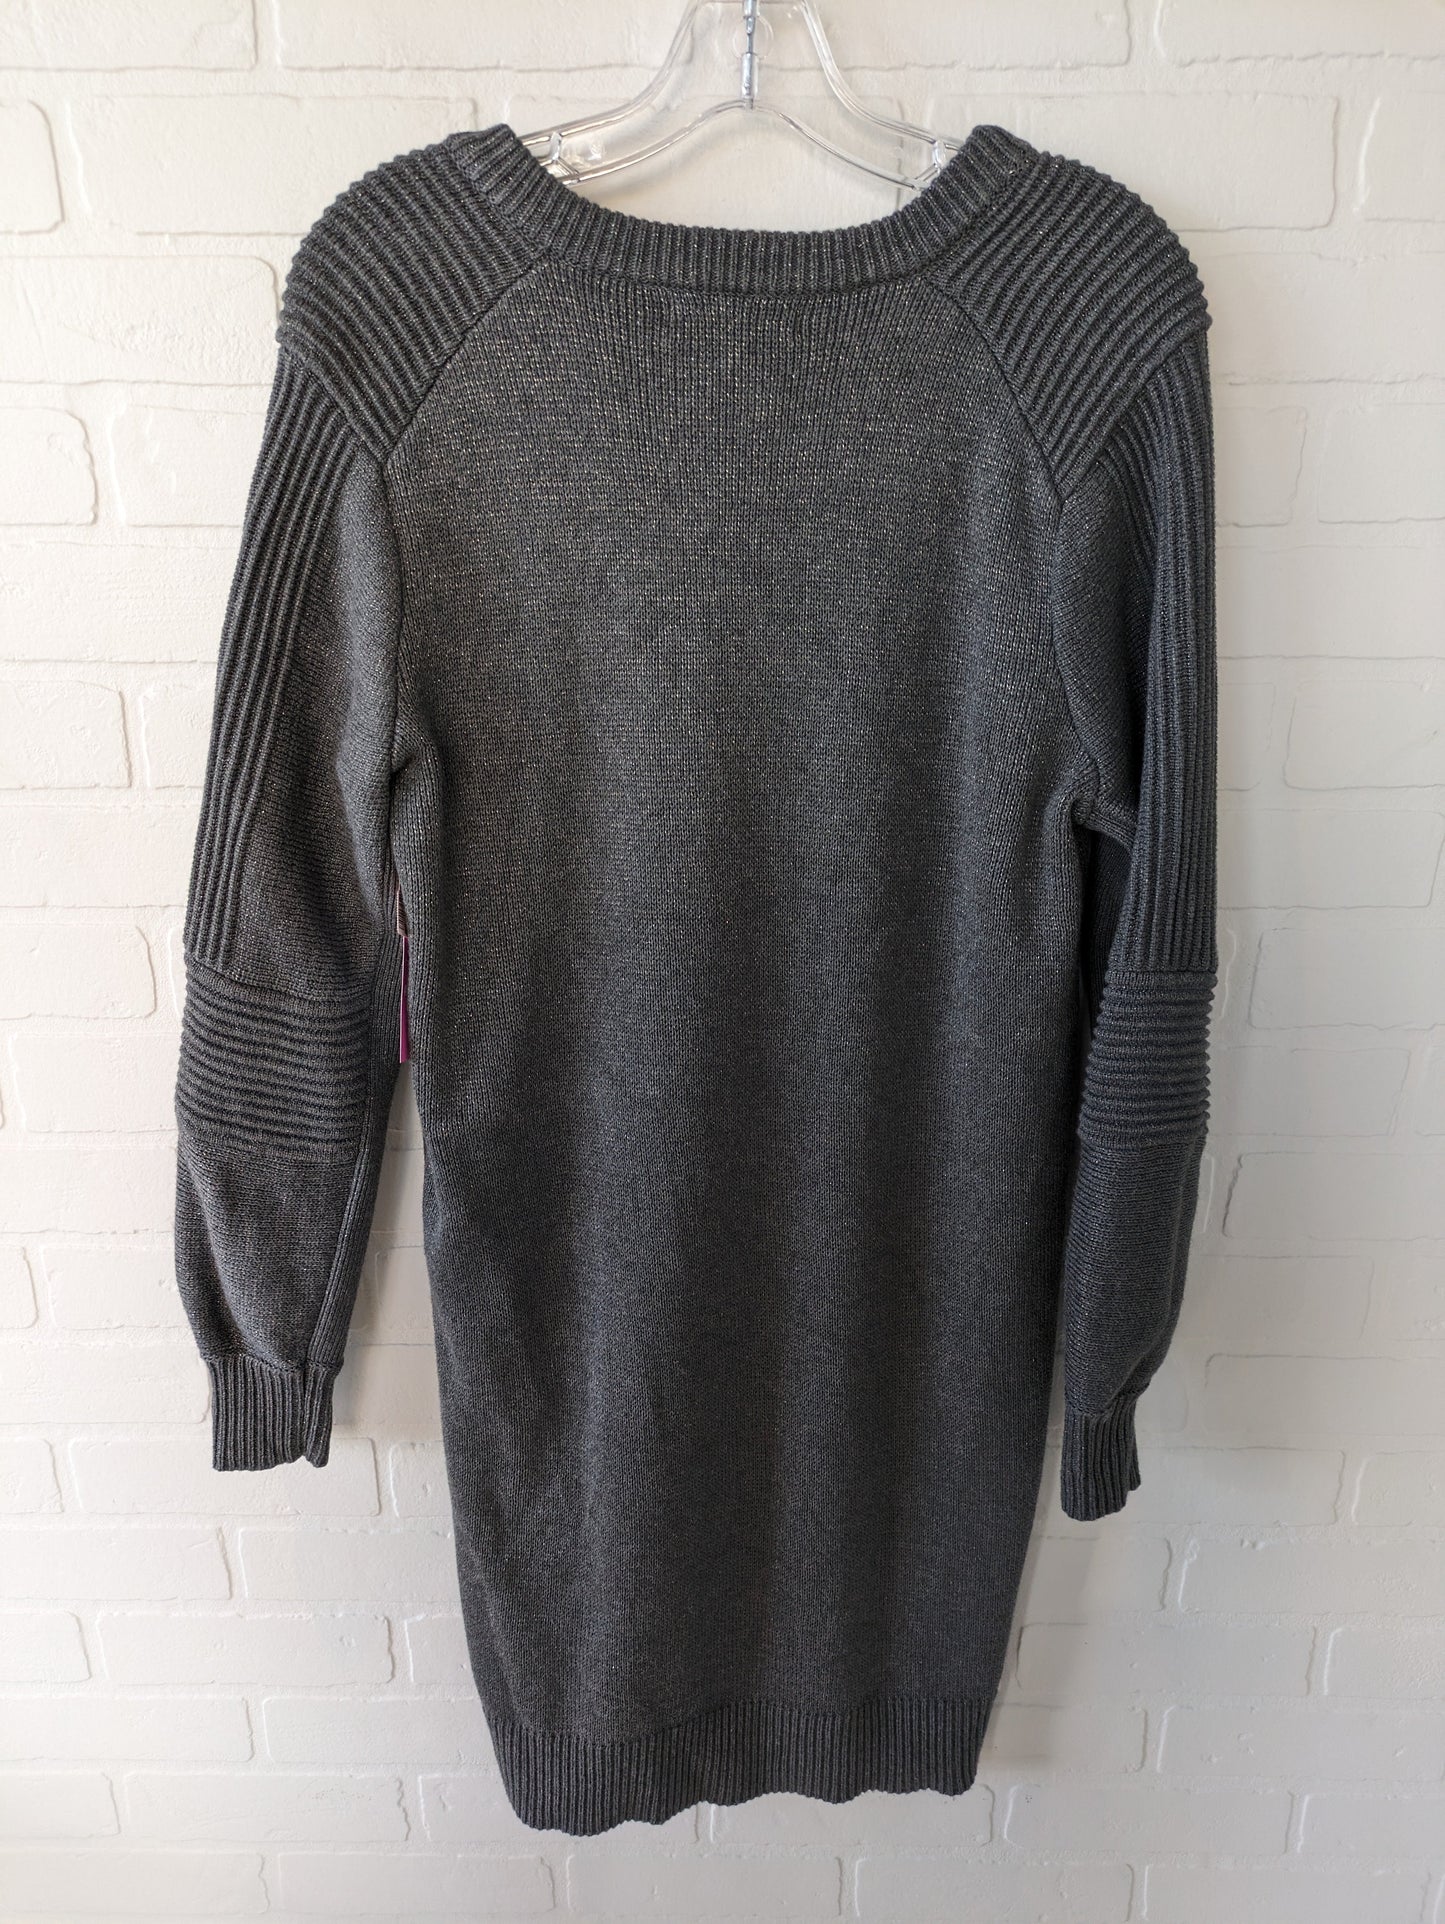 Dress Sweater By Rebecca Minkoff  Size: L